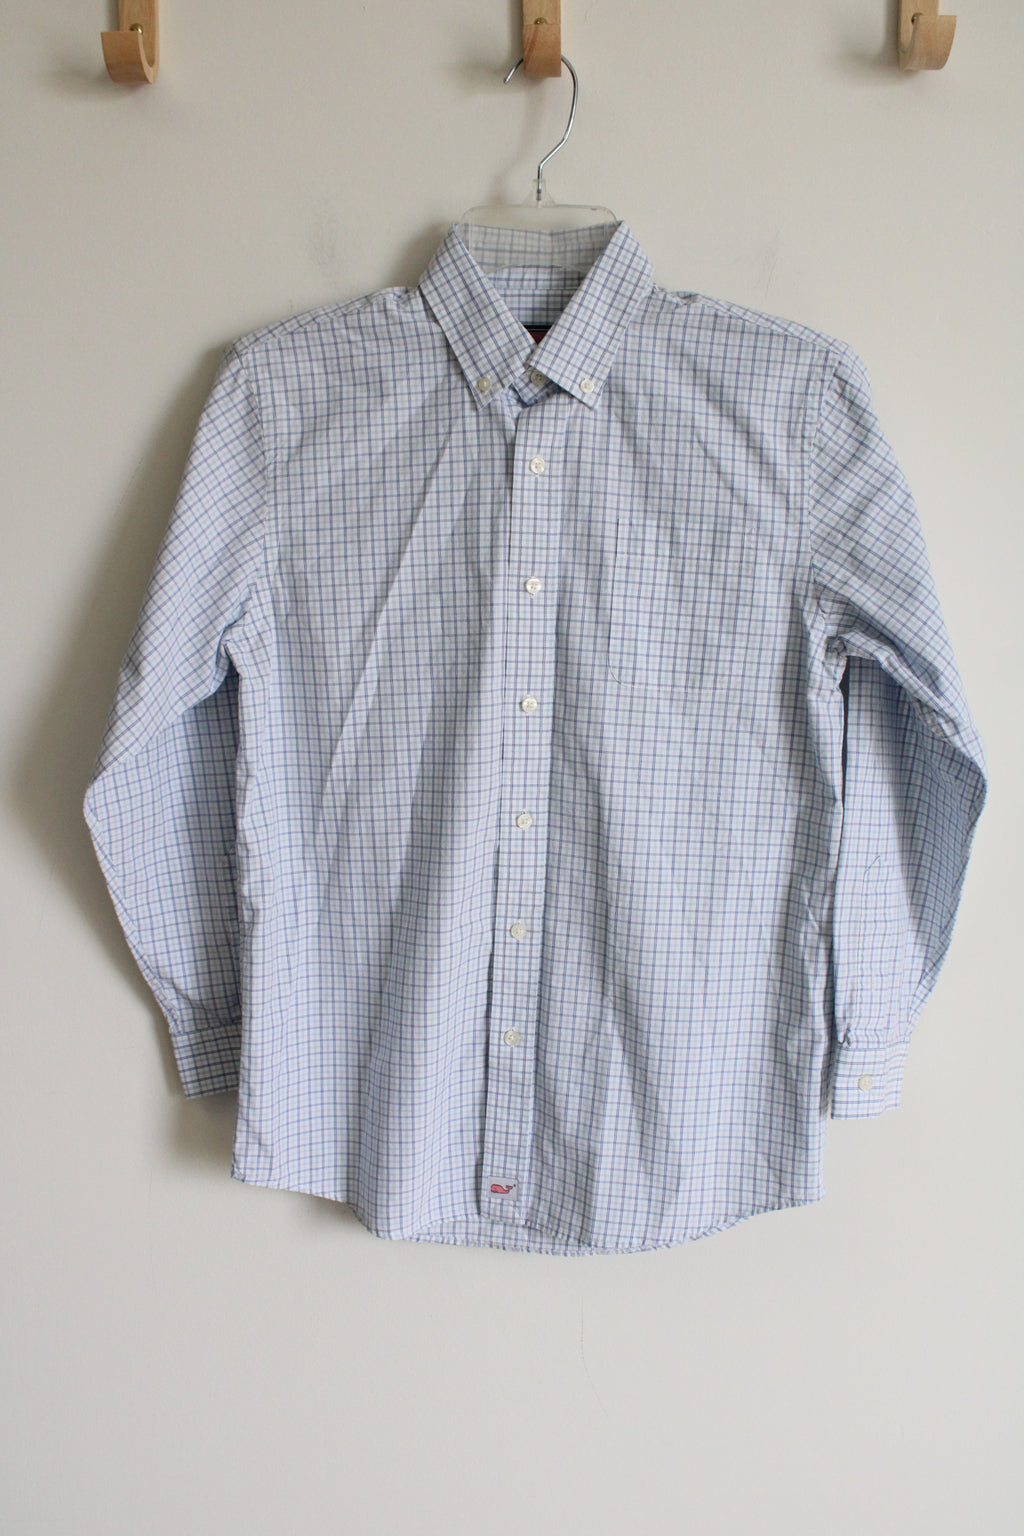 Vineyard Vines Murray Shirt Cotton Plaid Button Down | Youth M (12/14)